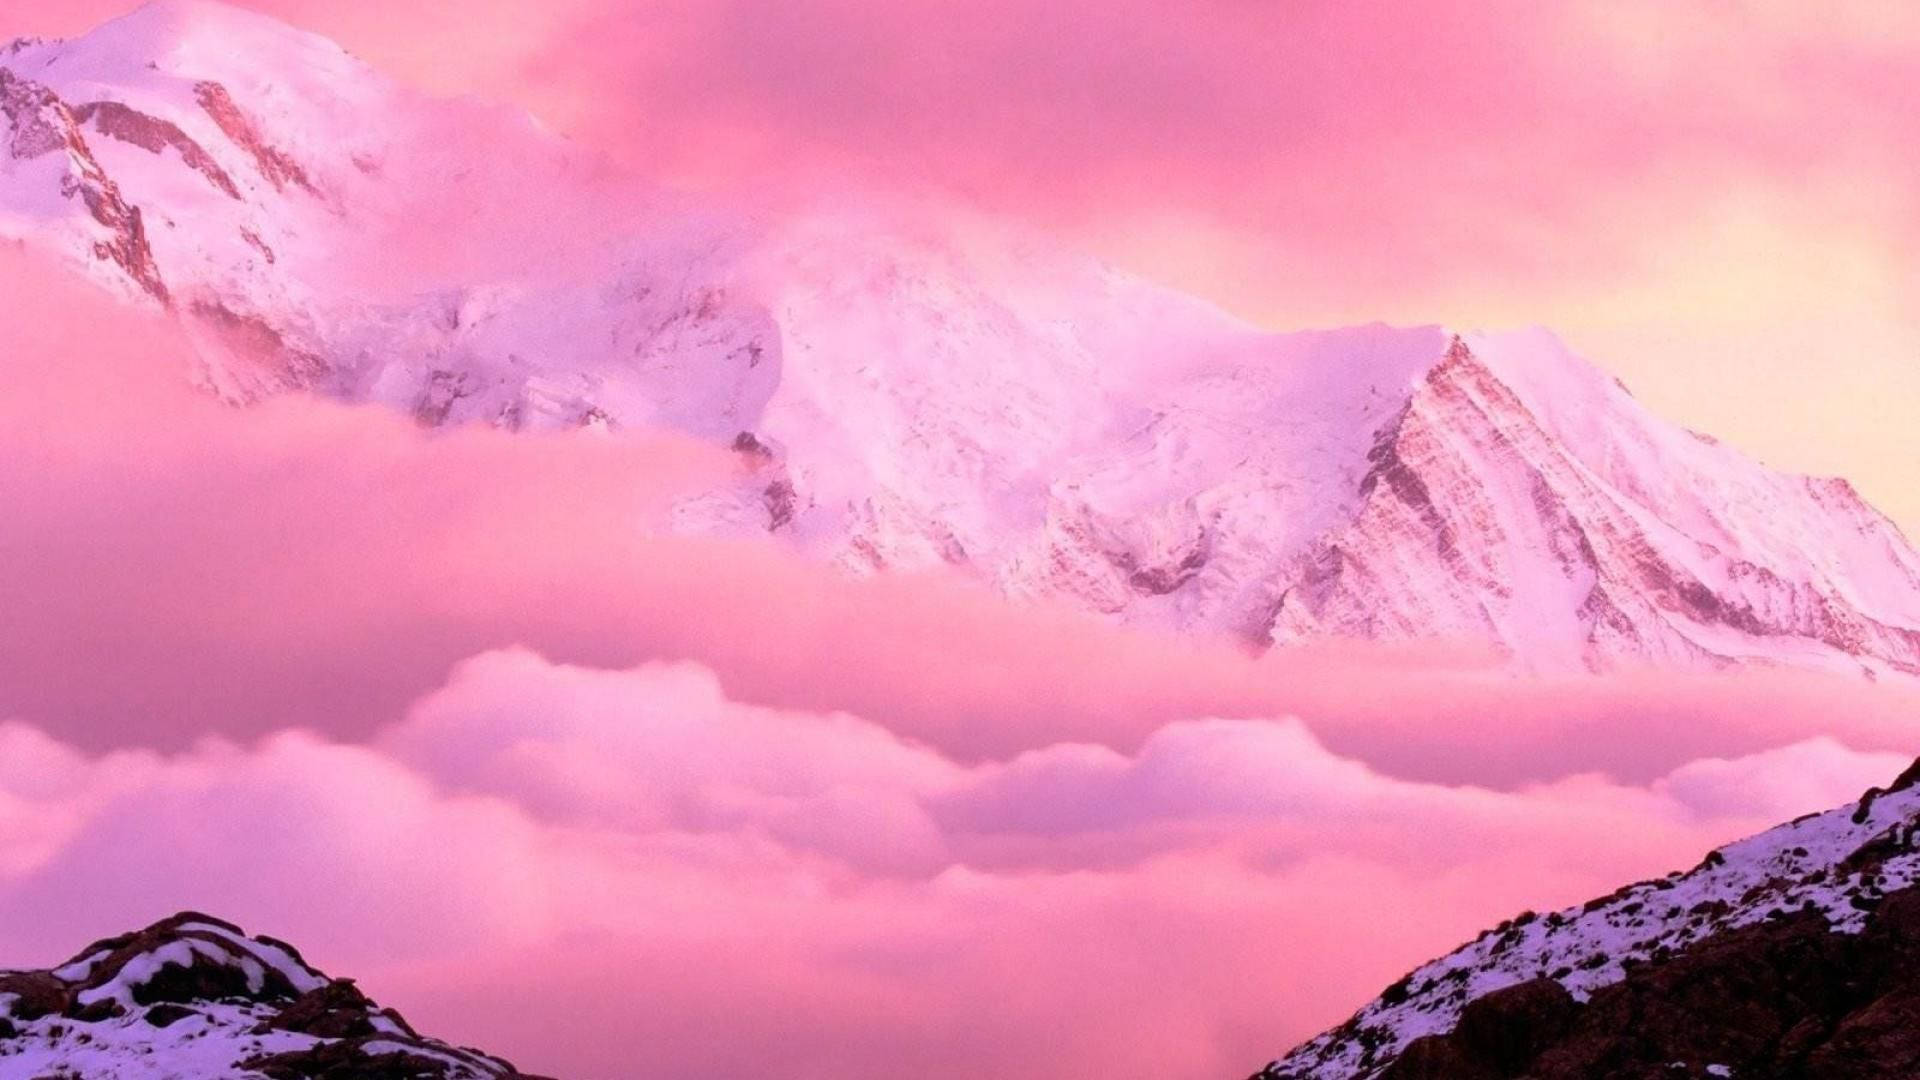 Snowy mountains in the pink sky wallpaper - Pink, HD, desktop, 1920x1080, light pink, landscape, beautiful